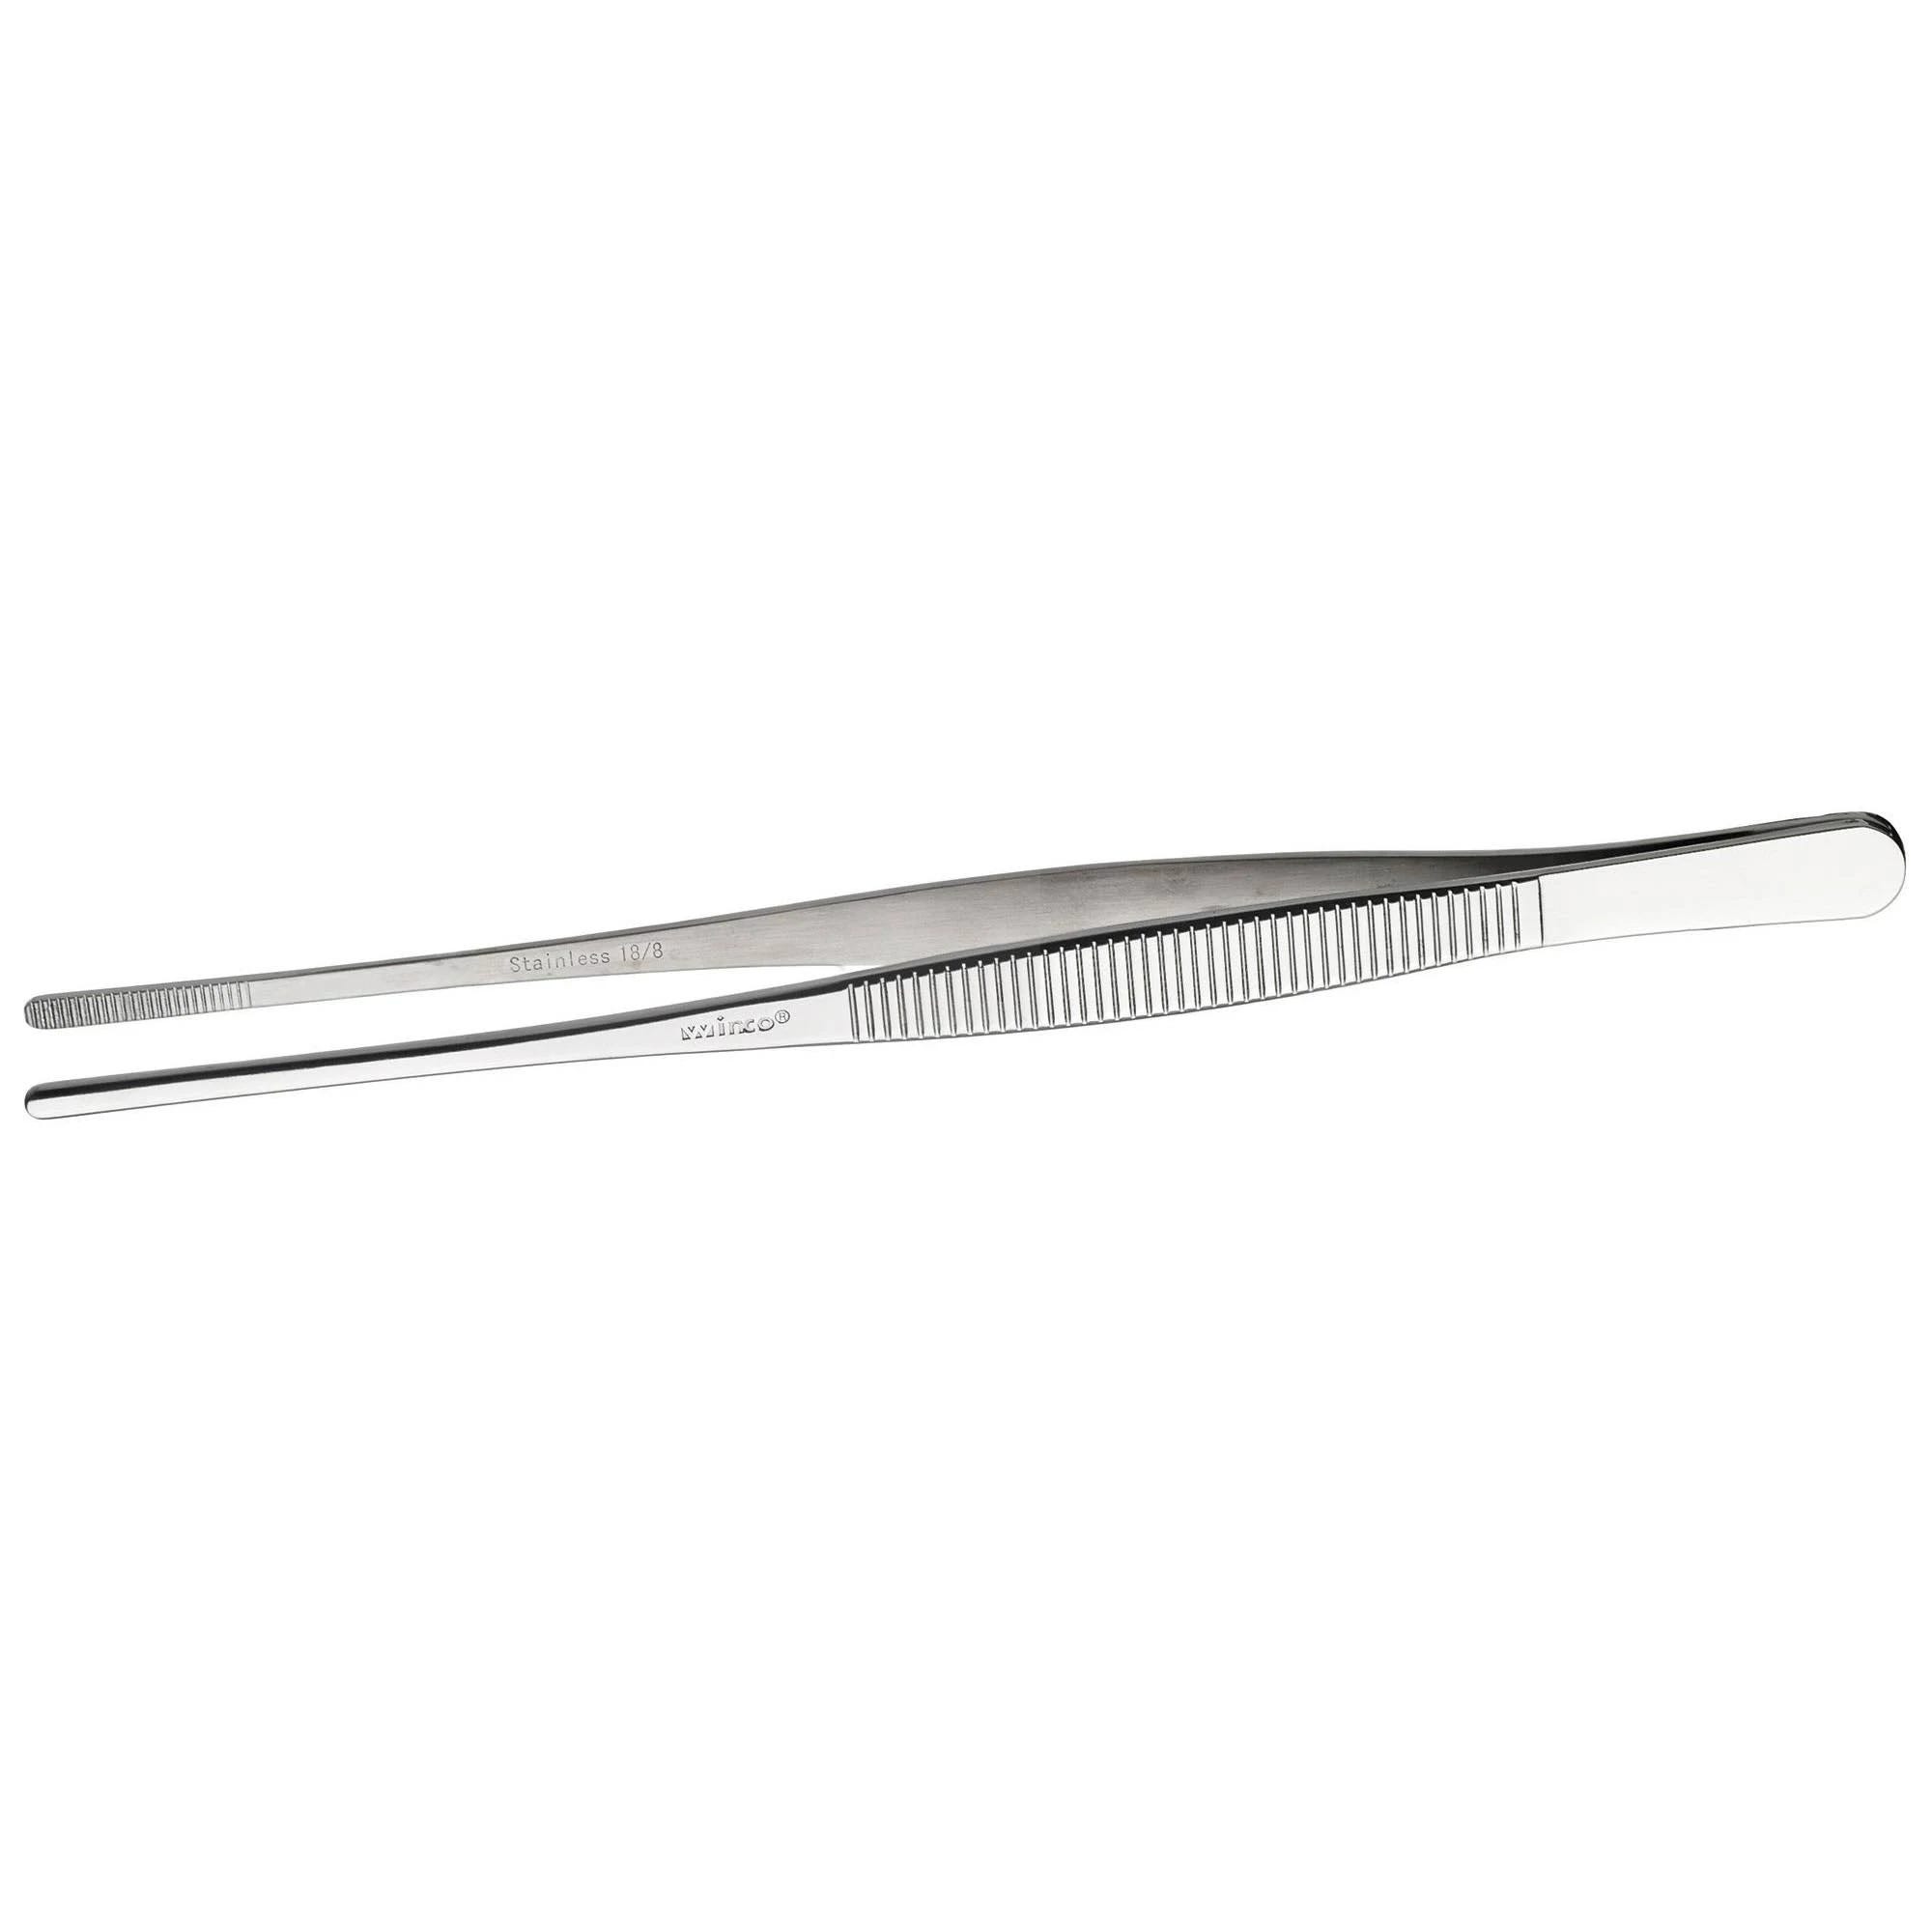 Stainless Steel Straight Beaker Tongs for Easy Plating and Handling | Image